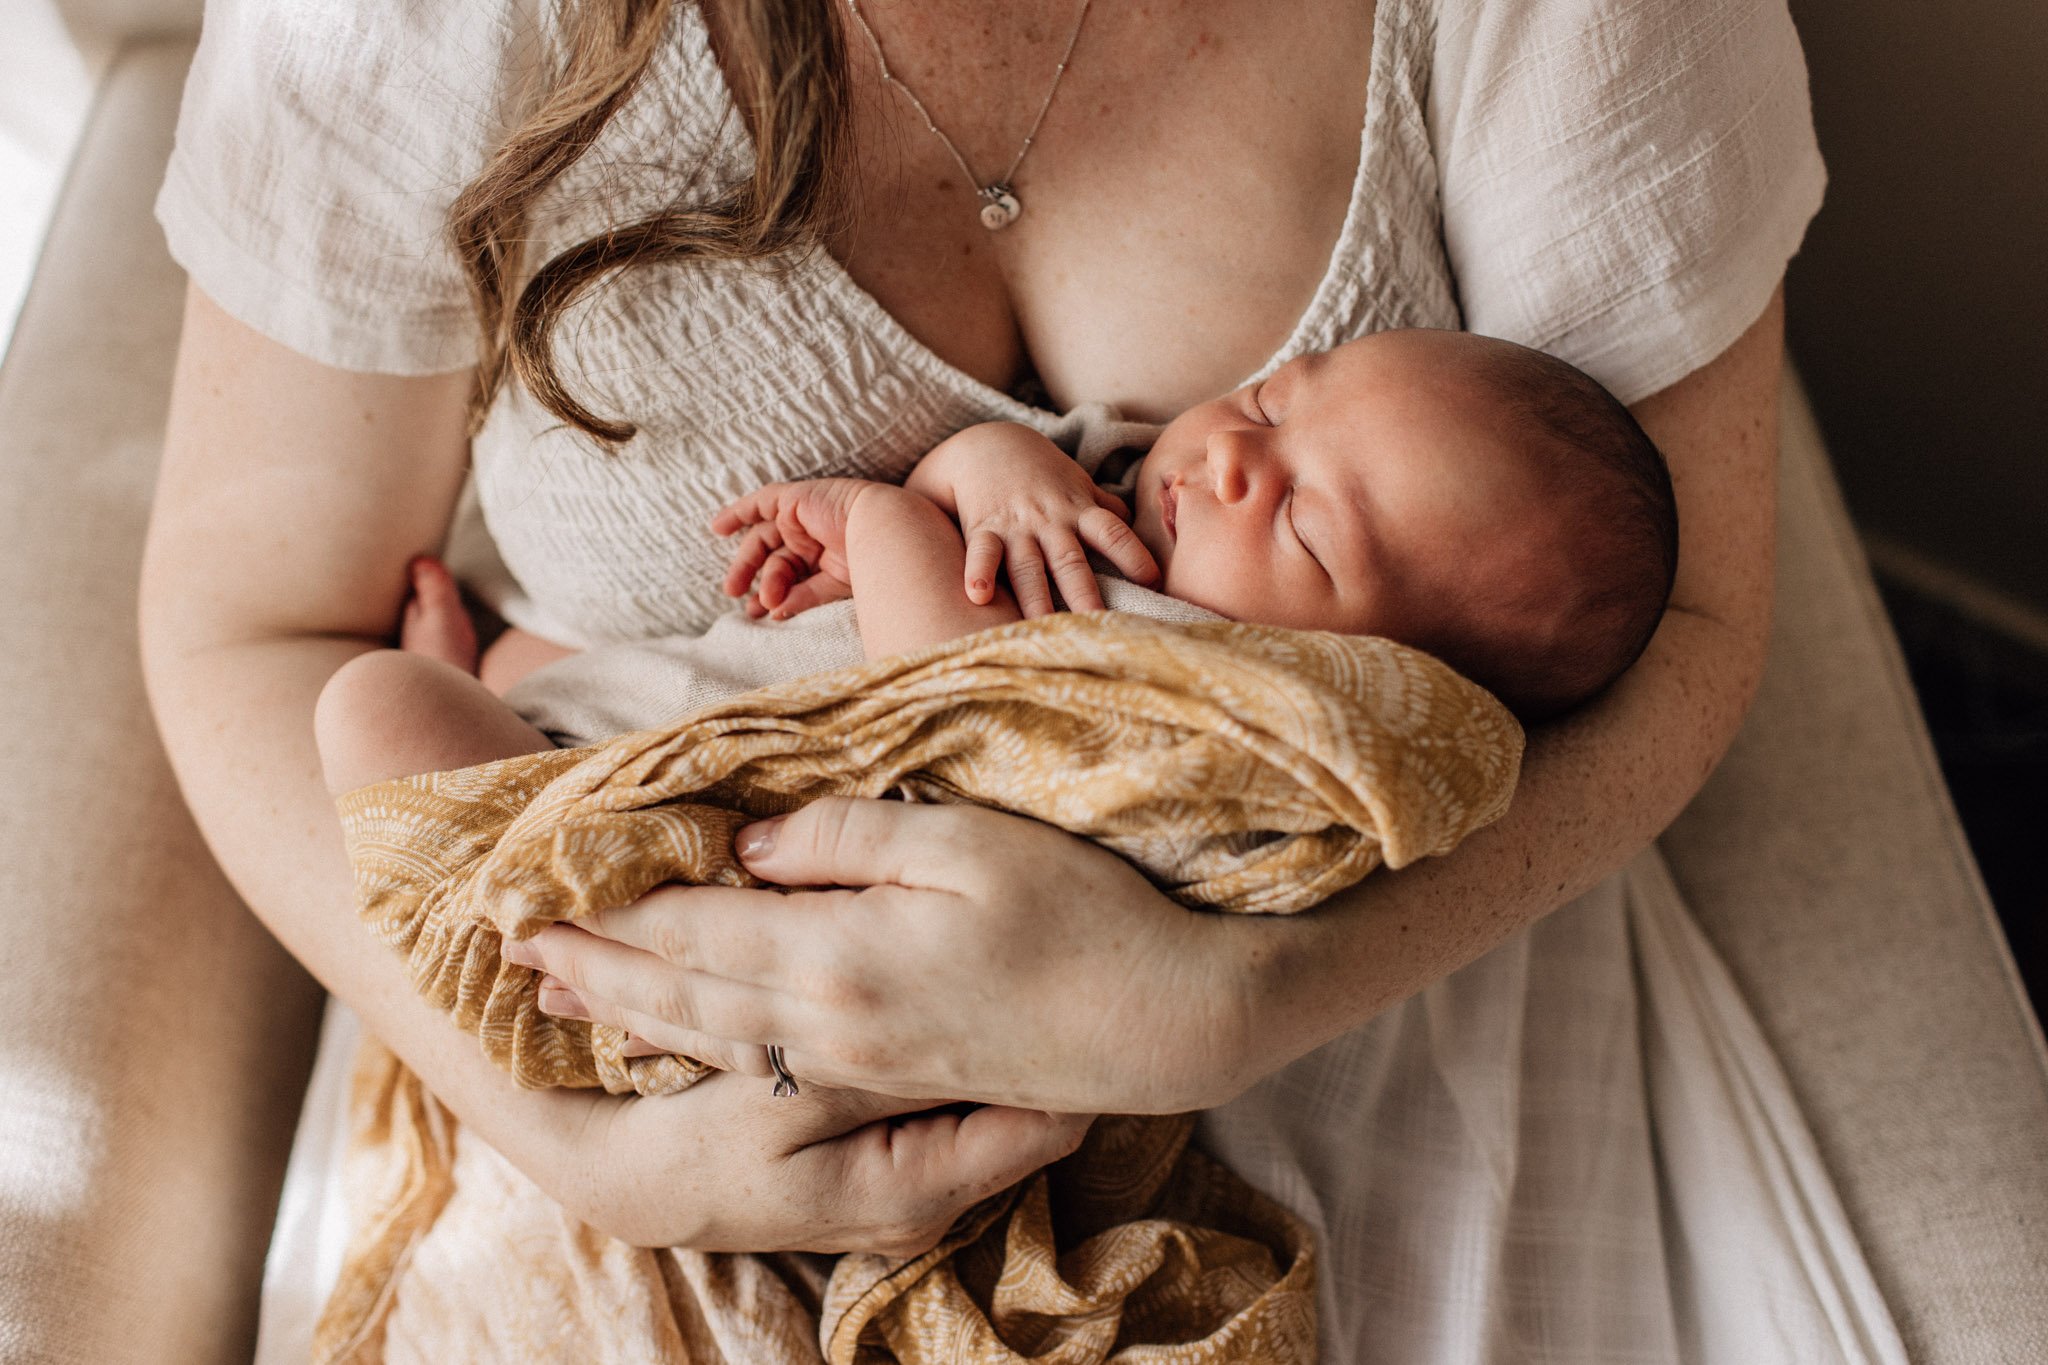 Geelong newborn baby cradled in mother's arms.jpg